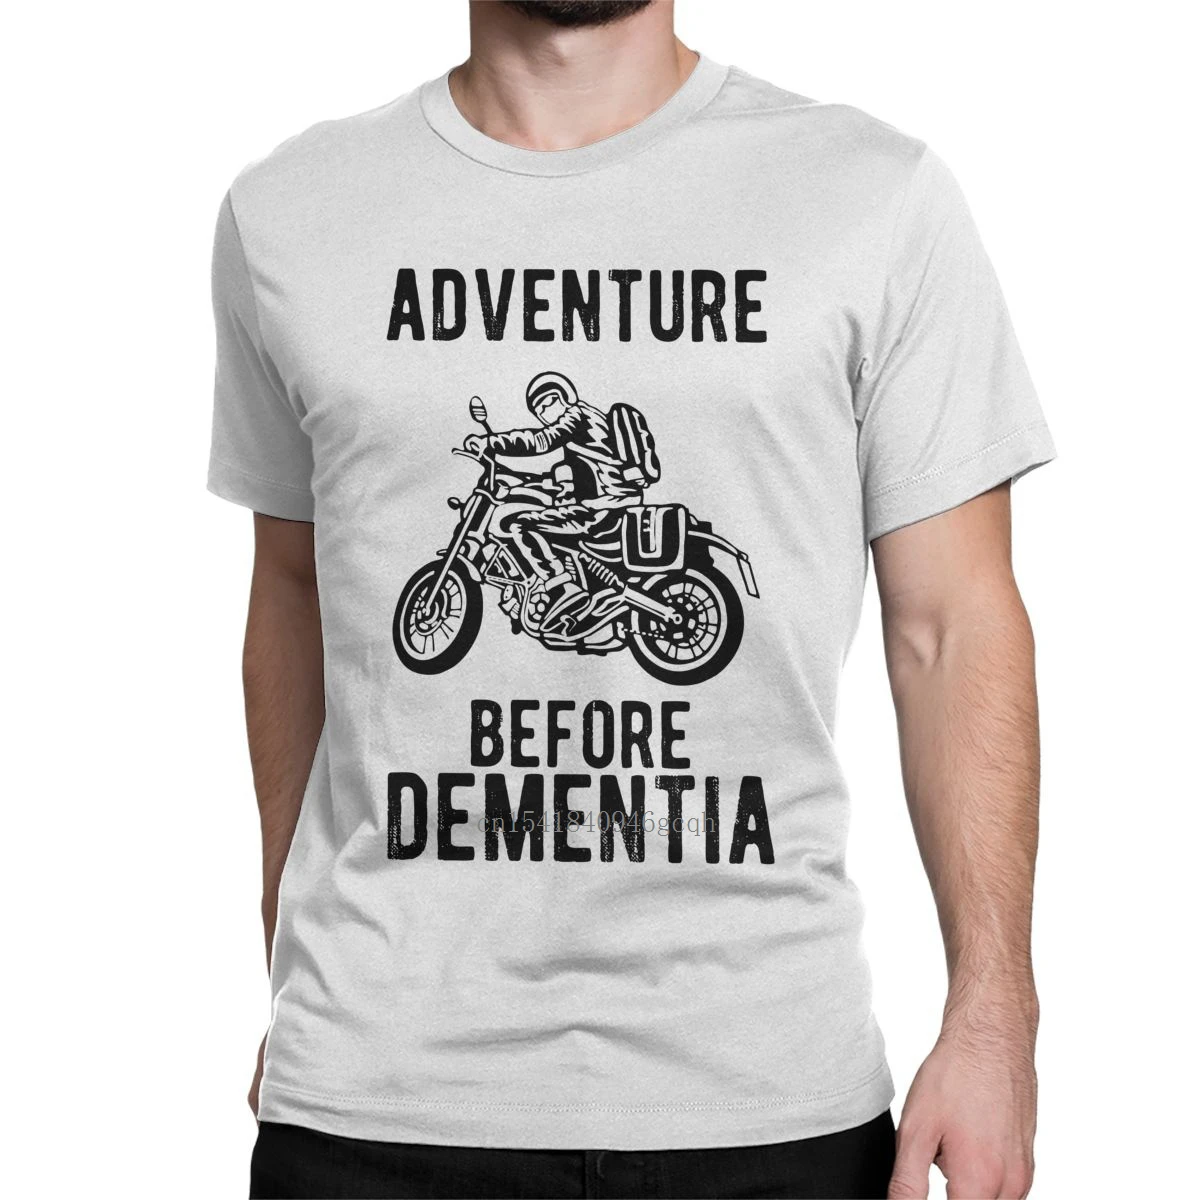 

Novelty Adventure Before Dementia Motorbike Rider Motorcycle T-Shirt for Men 100% Cotton T Shirt Racing Speed Tee Shirt Clothing